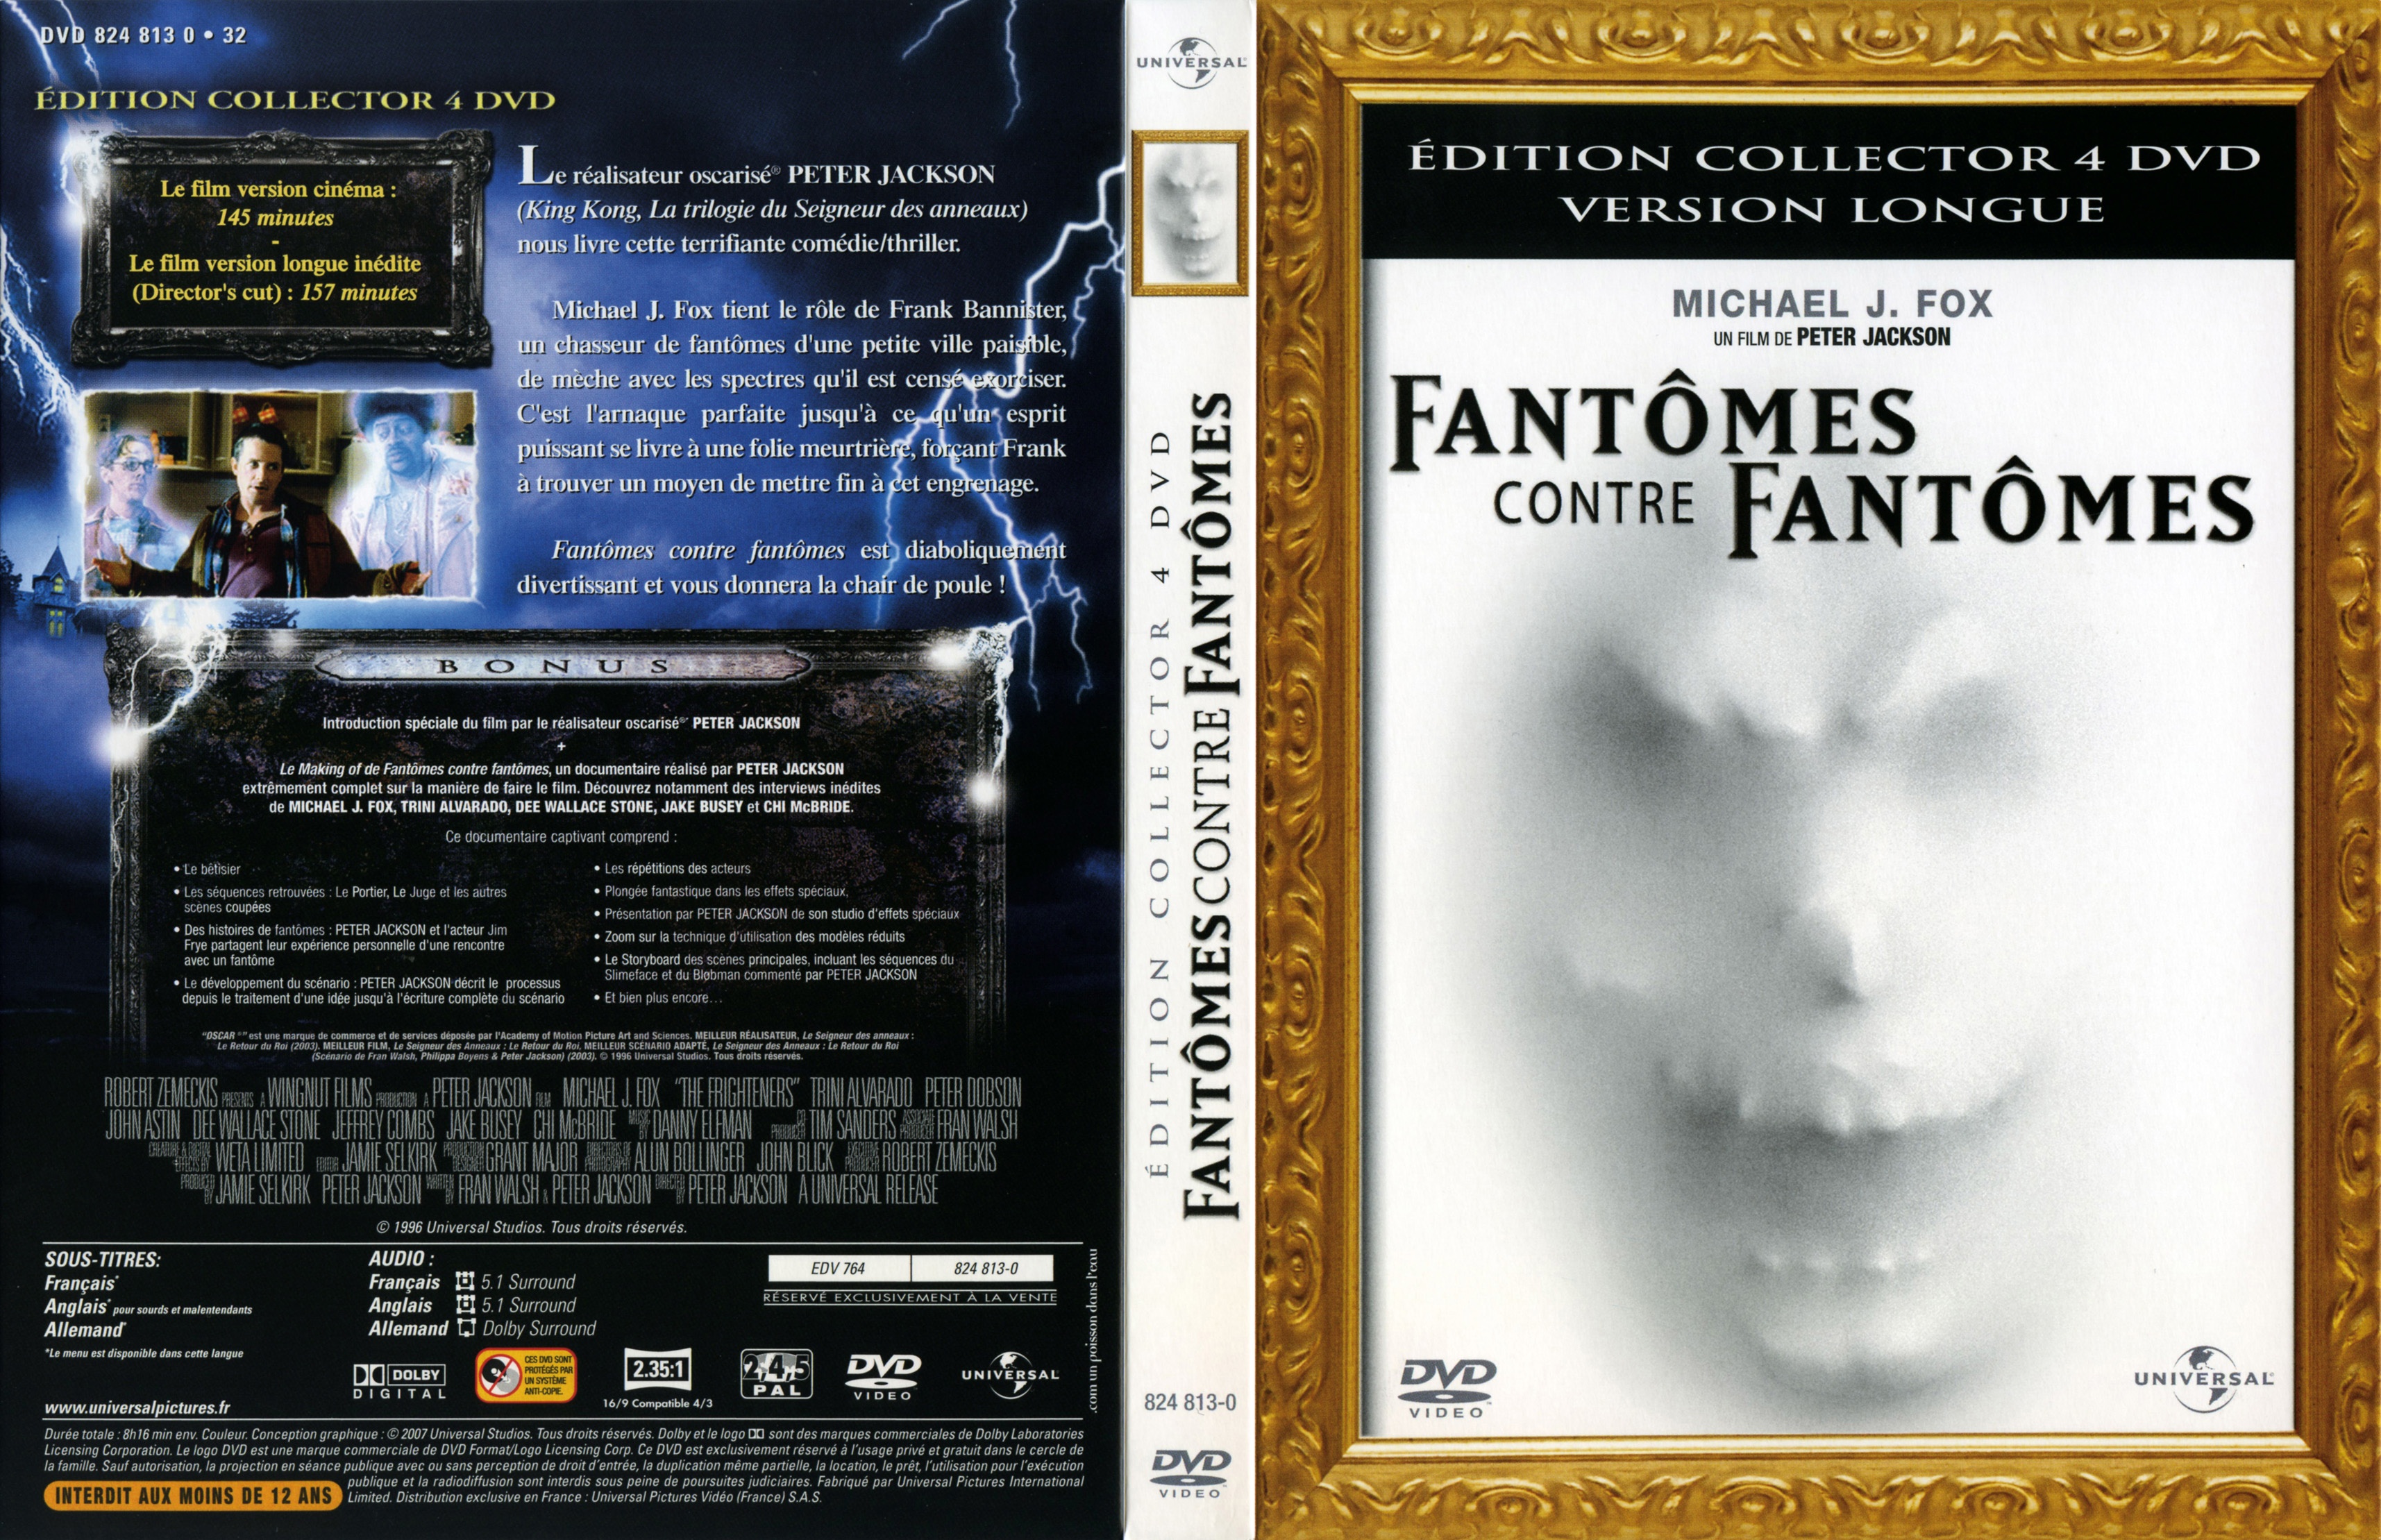 Jaquette DVD Fantomes contre fantomes v3